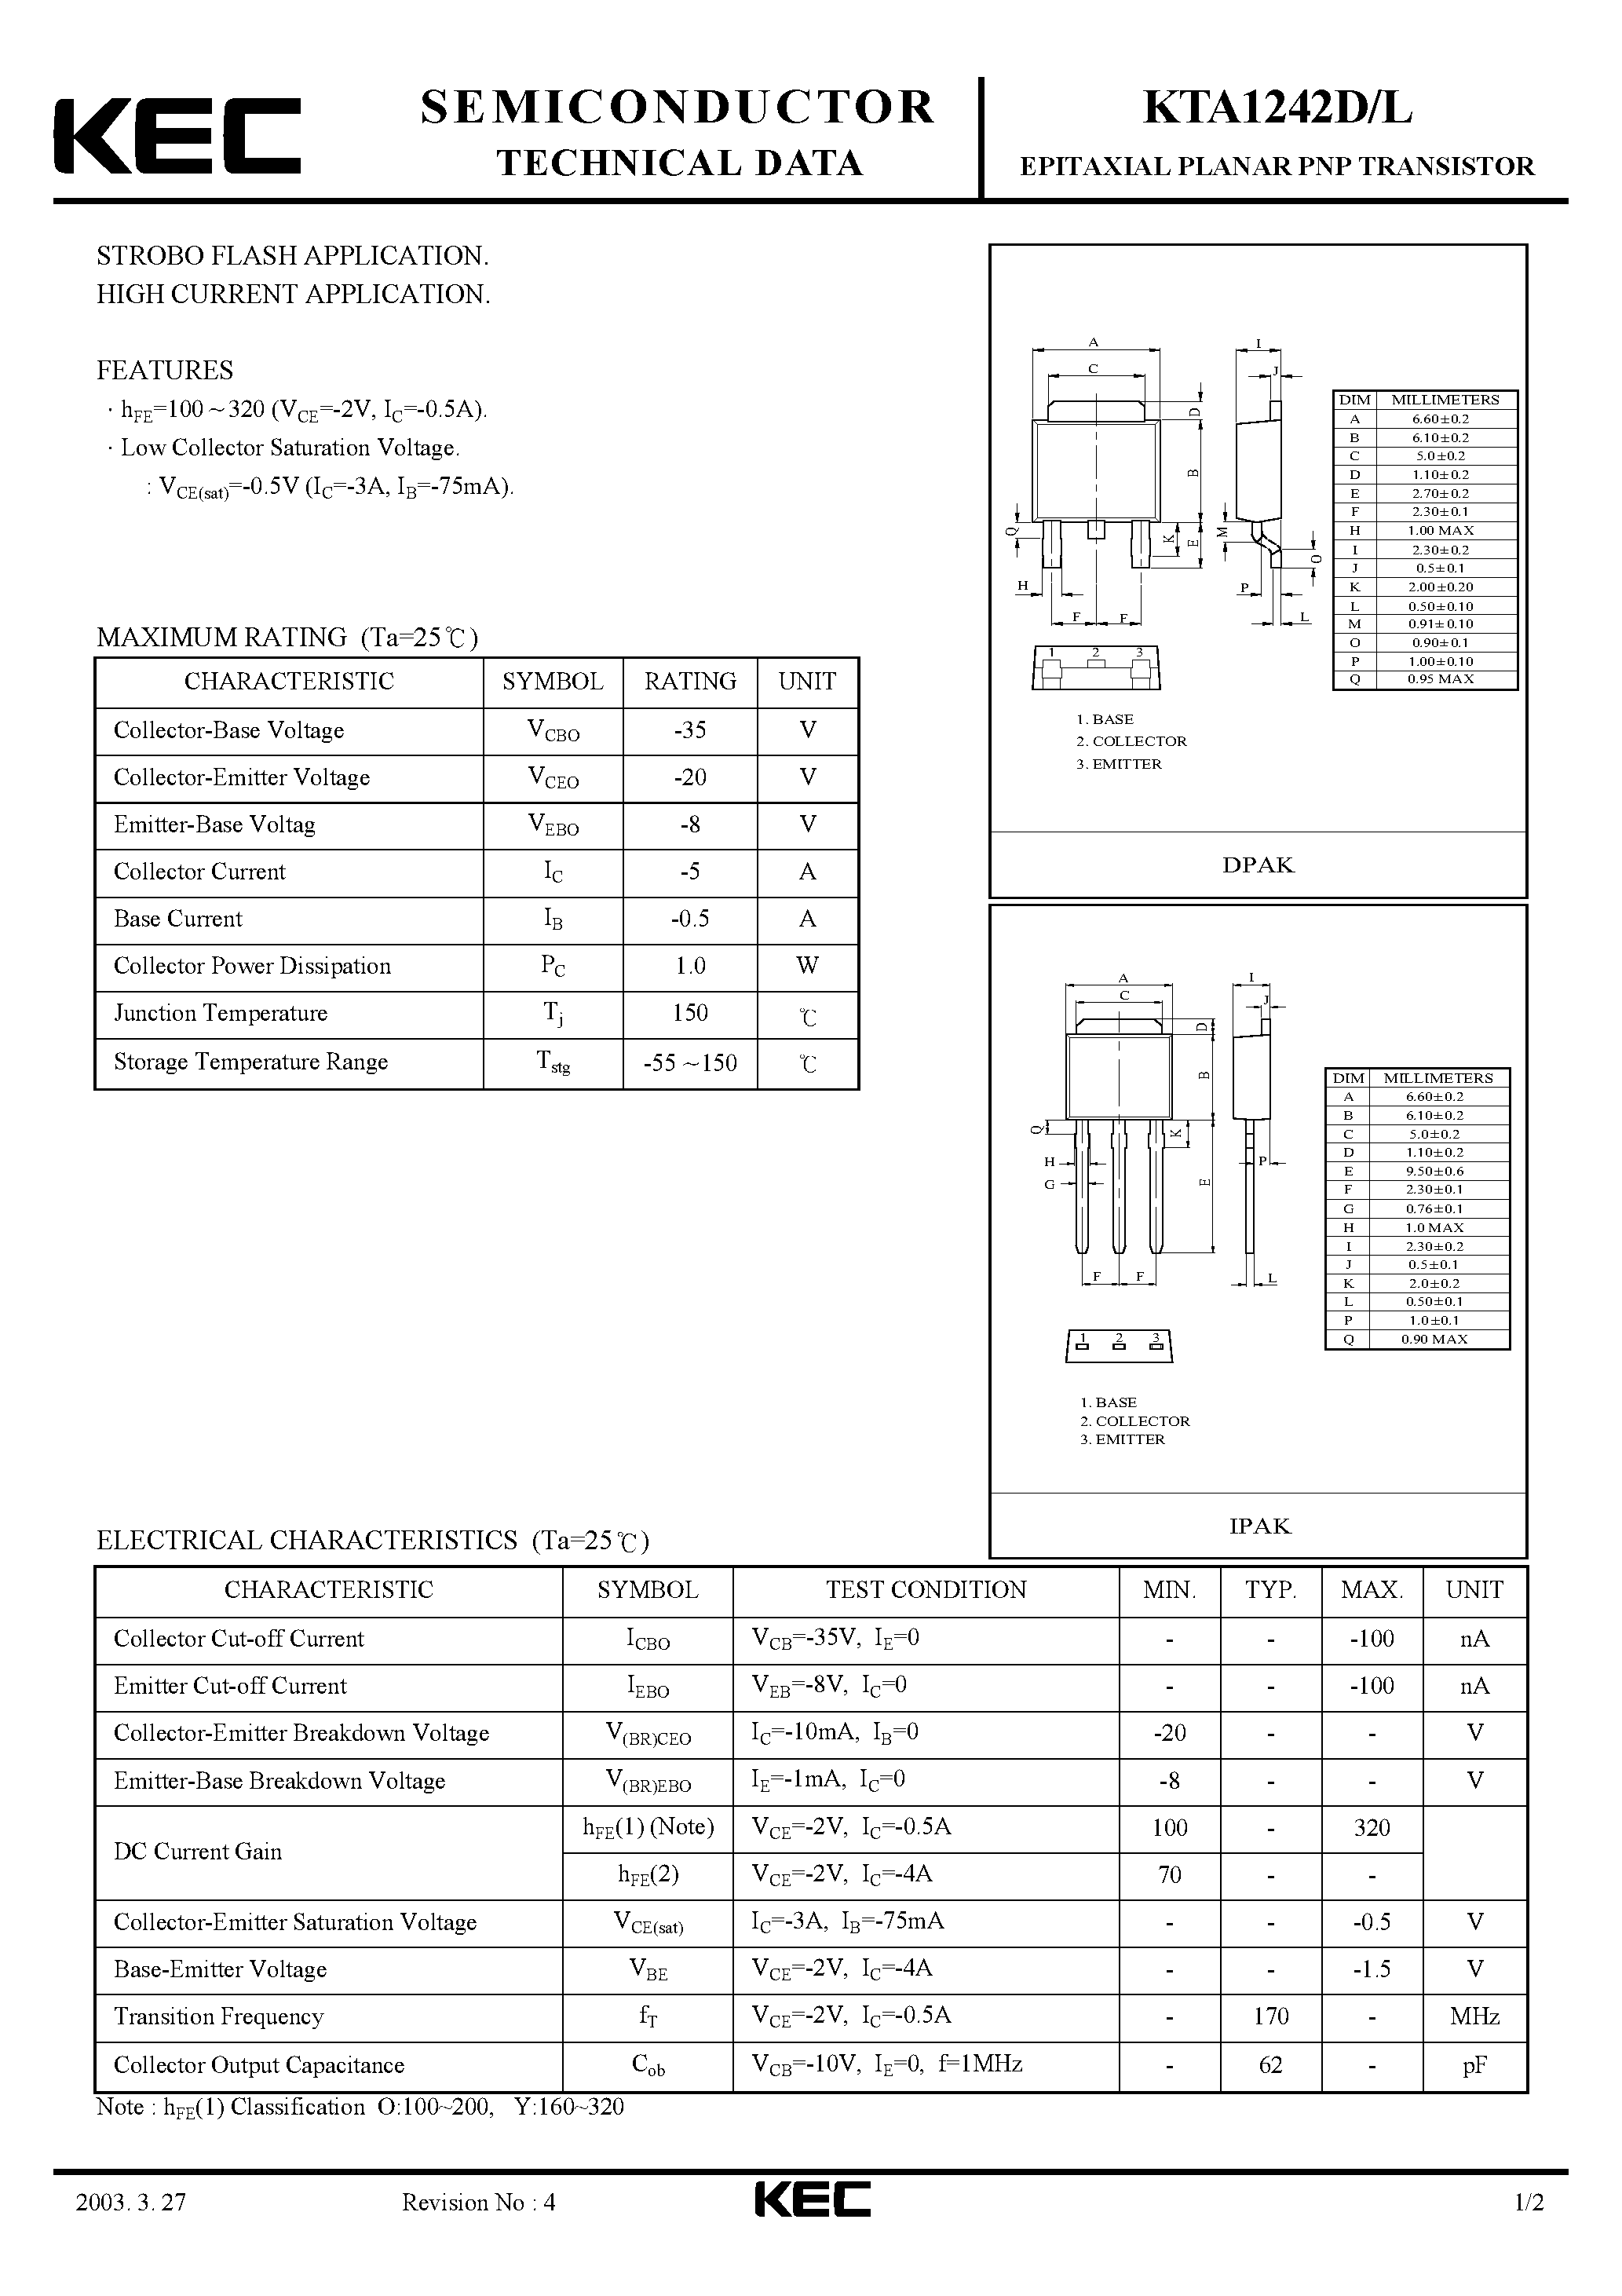 Datasheet KTA1242L - EPITAXIAL PLANAR PNP TRANSISTOR (STROBO FLASH/ HIGH CURRENT) page 1